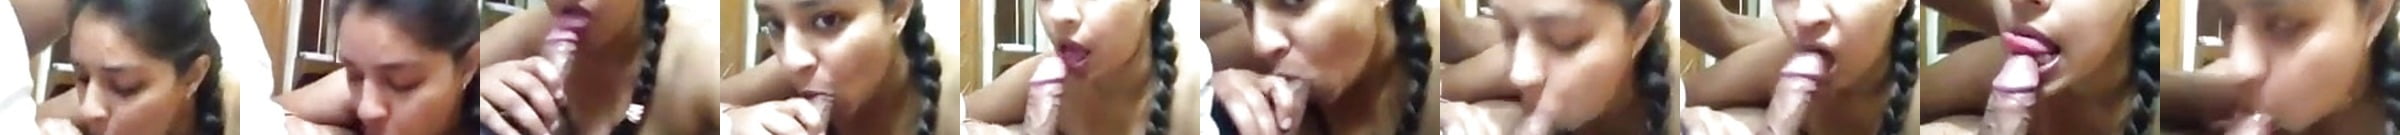 Vidéos Porno En Vedette Indian Blowjob Vidéos Porno 2 Xhamster